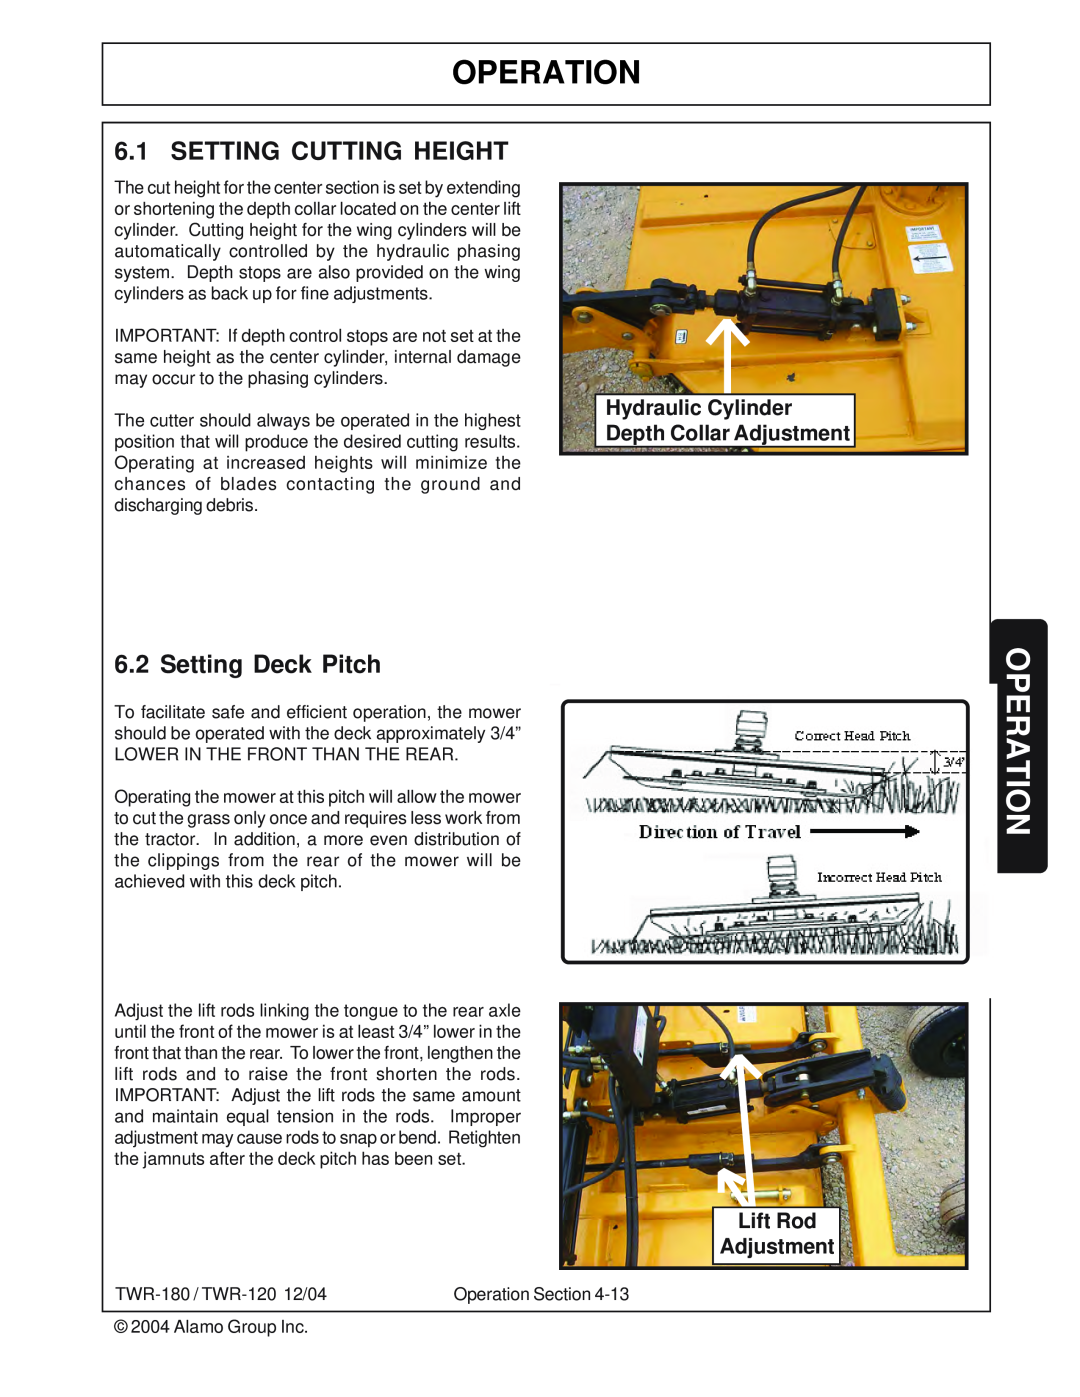 Tiger Products Co., Ltd TWR-120, TWR-180 Operation, Hydraulic Cylinder Depth Collar Adjustment, Leveling Rod Adjustments 